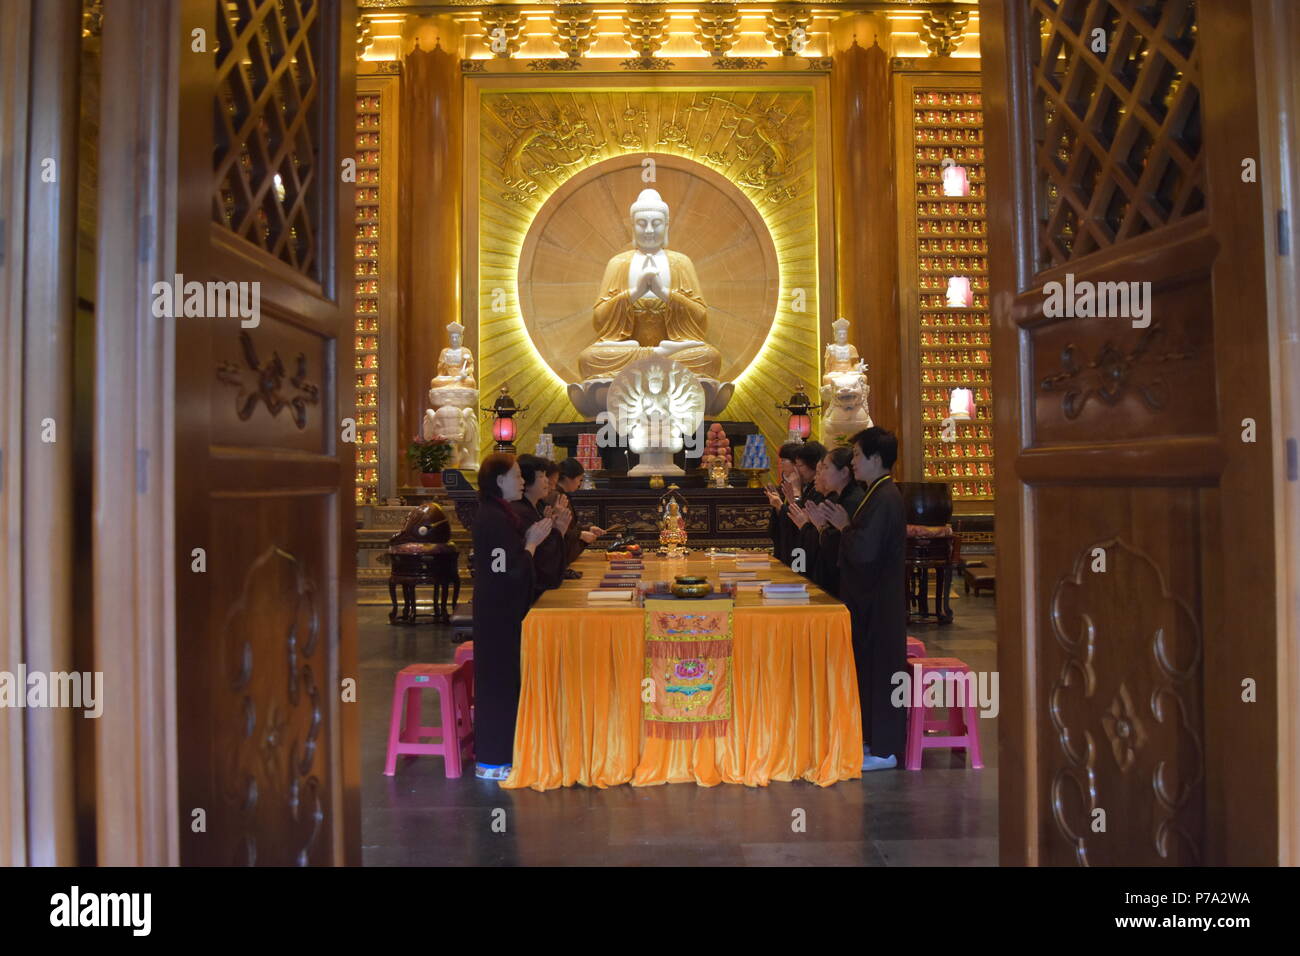 Buddhist monks ritual in Dafo Buddhist temple and monastery, Beijing road, Guangzhou, China Stock Photo